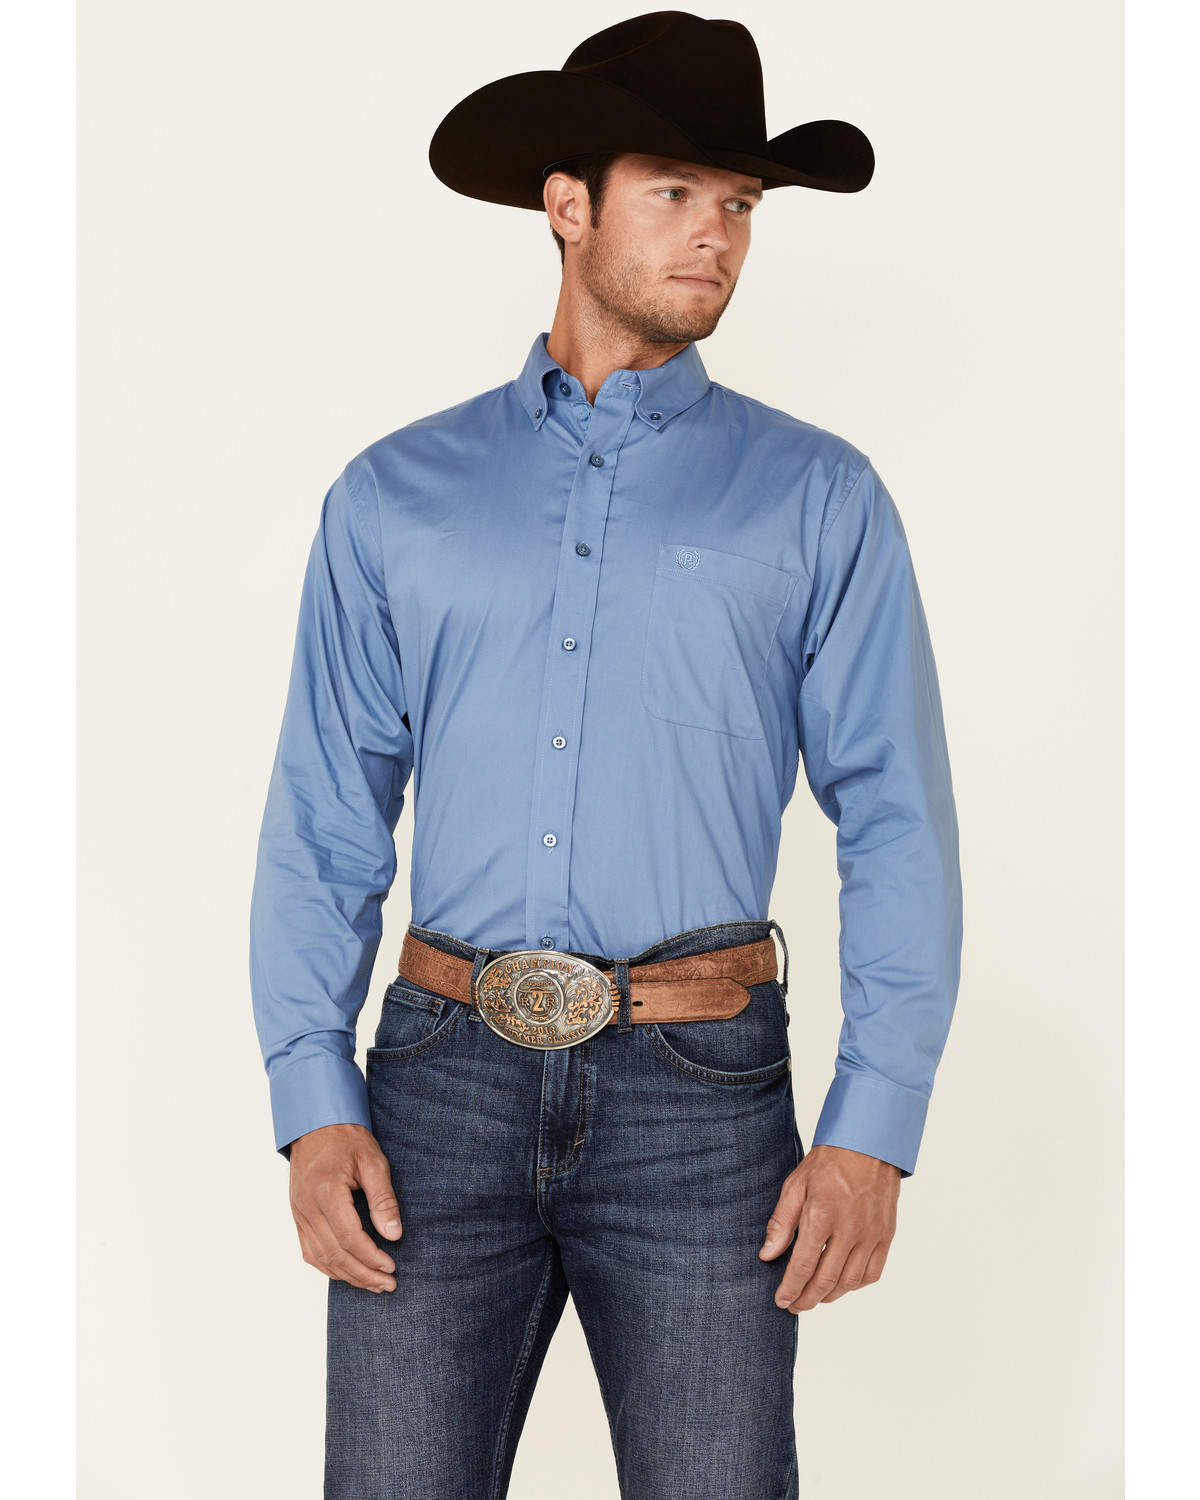 CBTLVSN Mens Cowboy Western Two Pocket Long Sleeve Button Down Work Shirt 